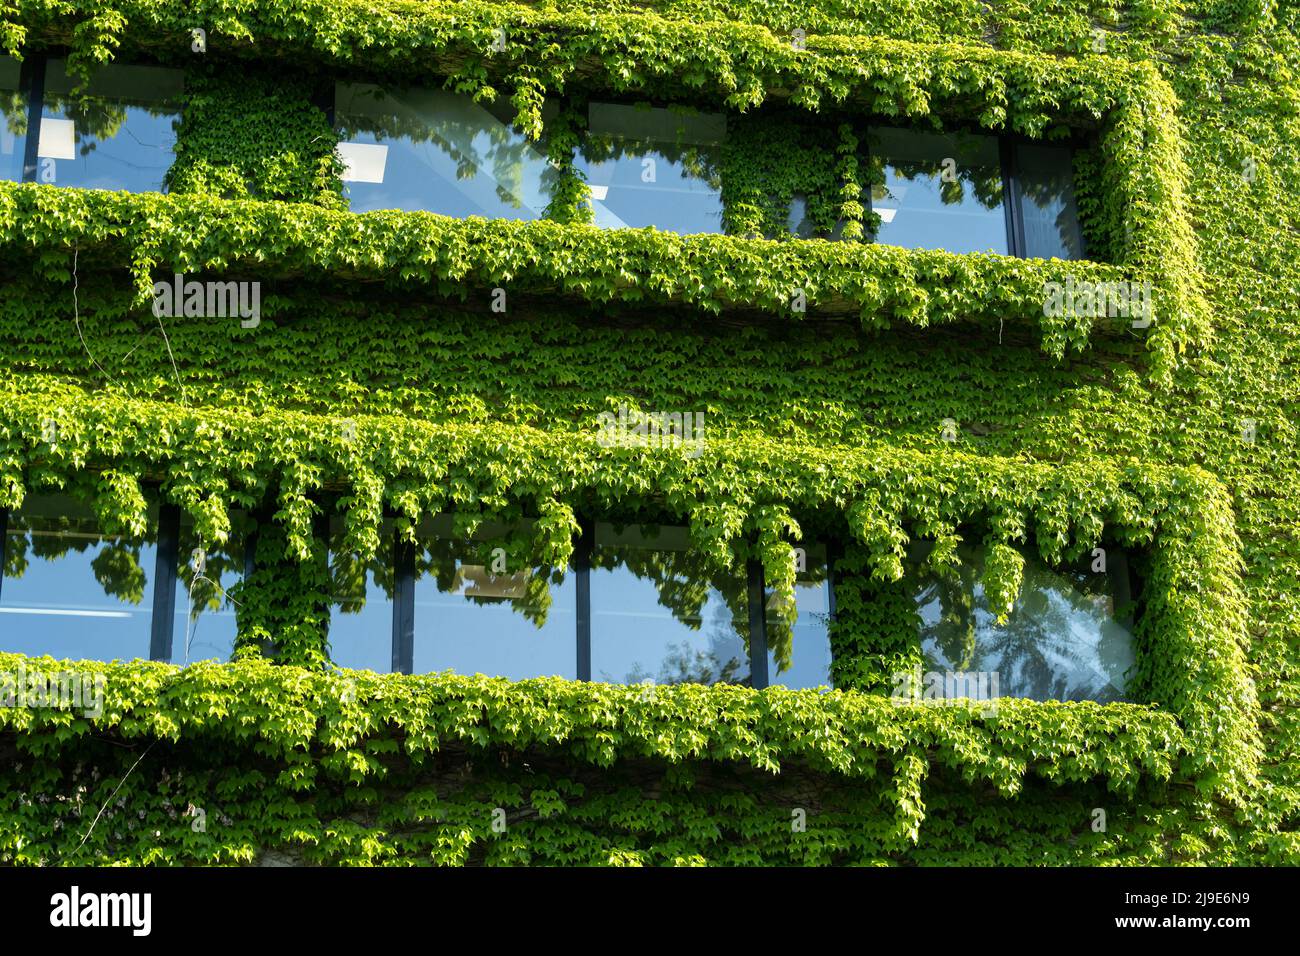 Green facade and eco house concept. Vine creeper around window on facade building covered wild grape Stock Photo